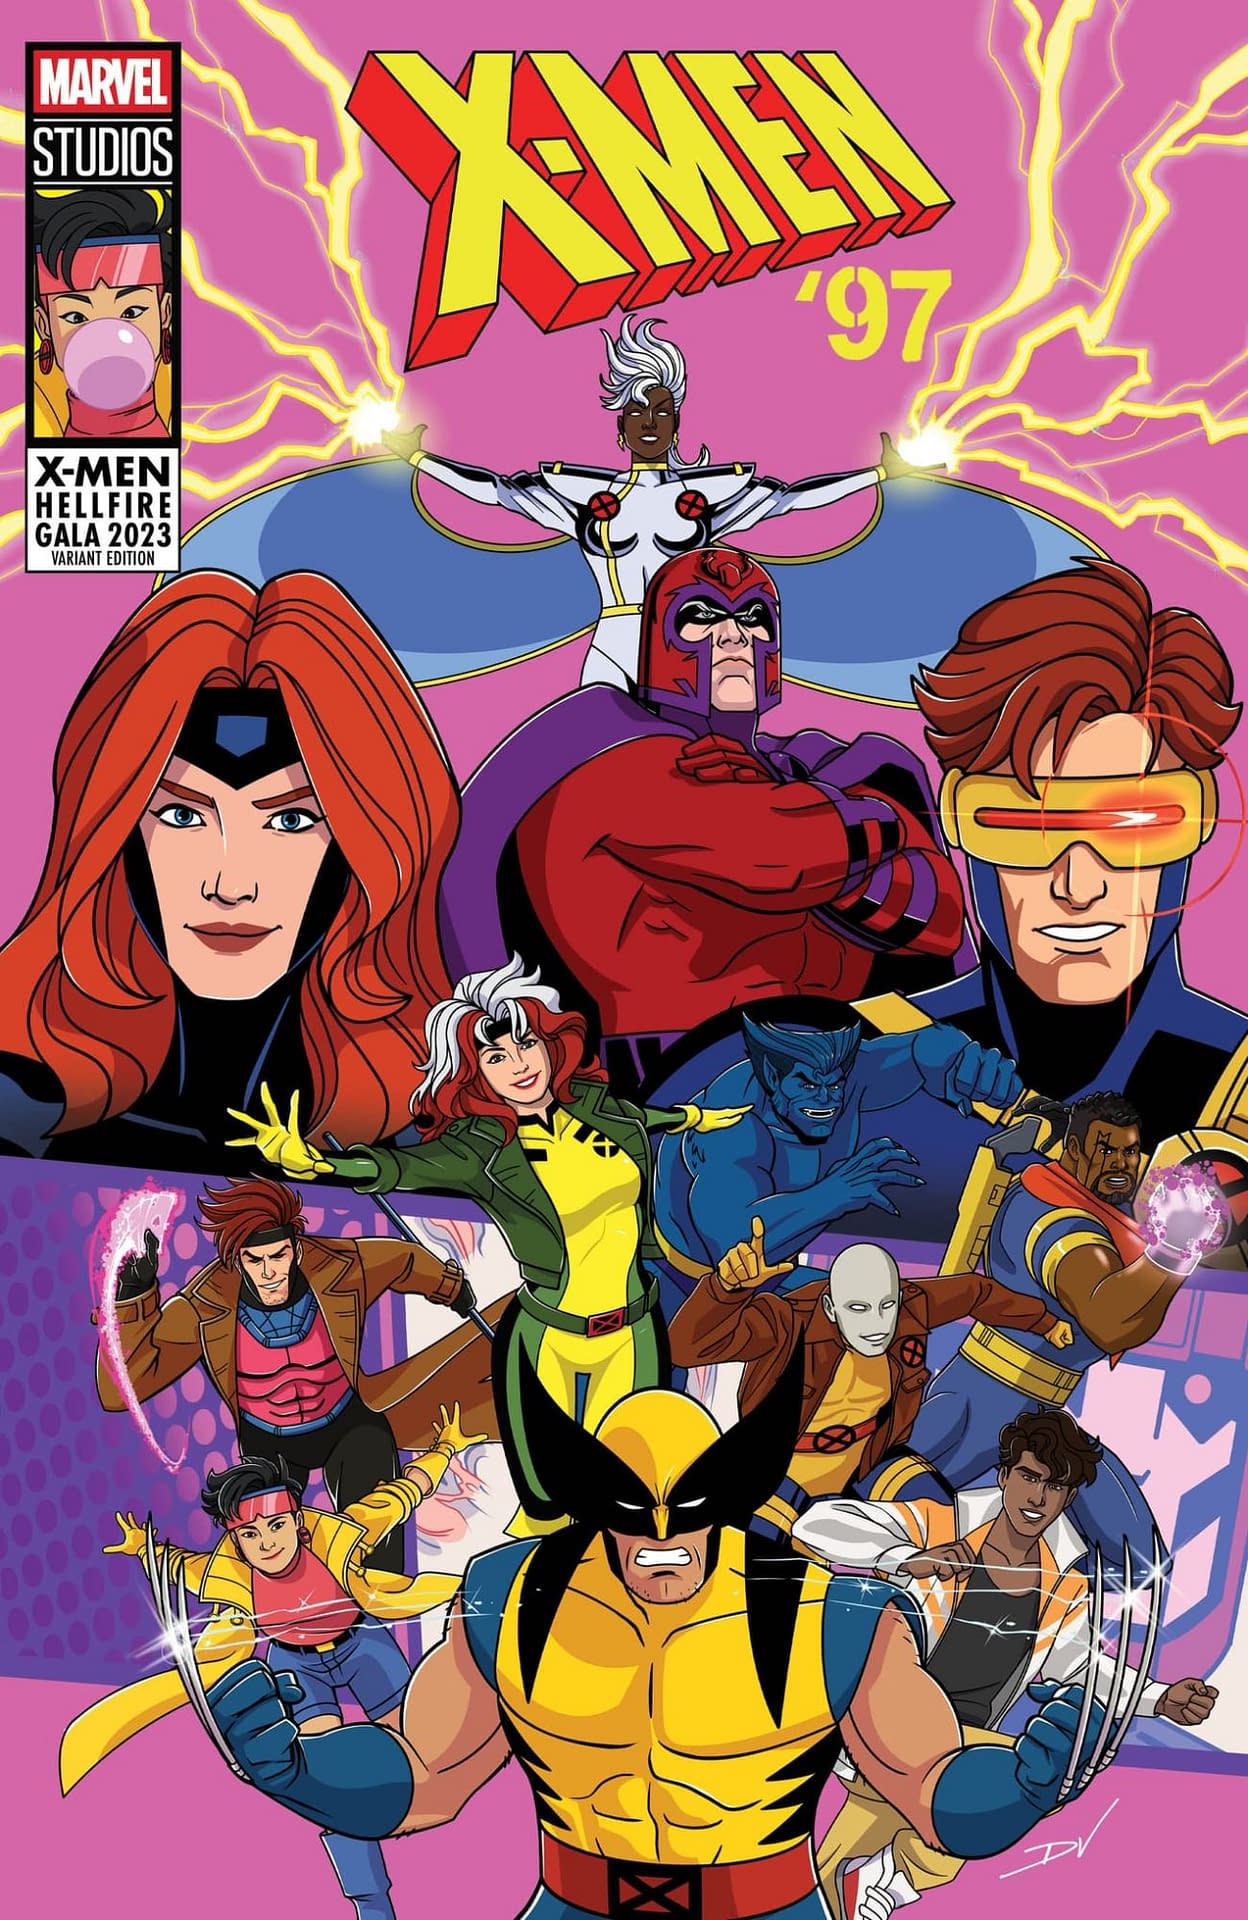 X-Men '97 Main Cast Look Released; Series Overview, Intel & More